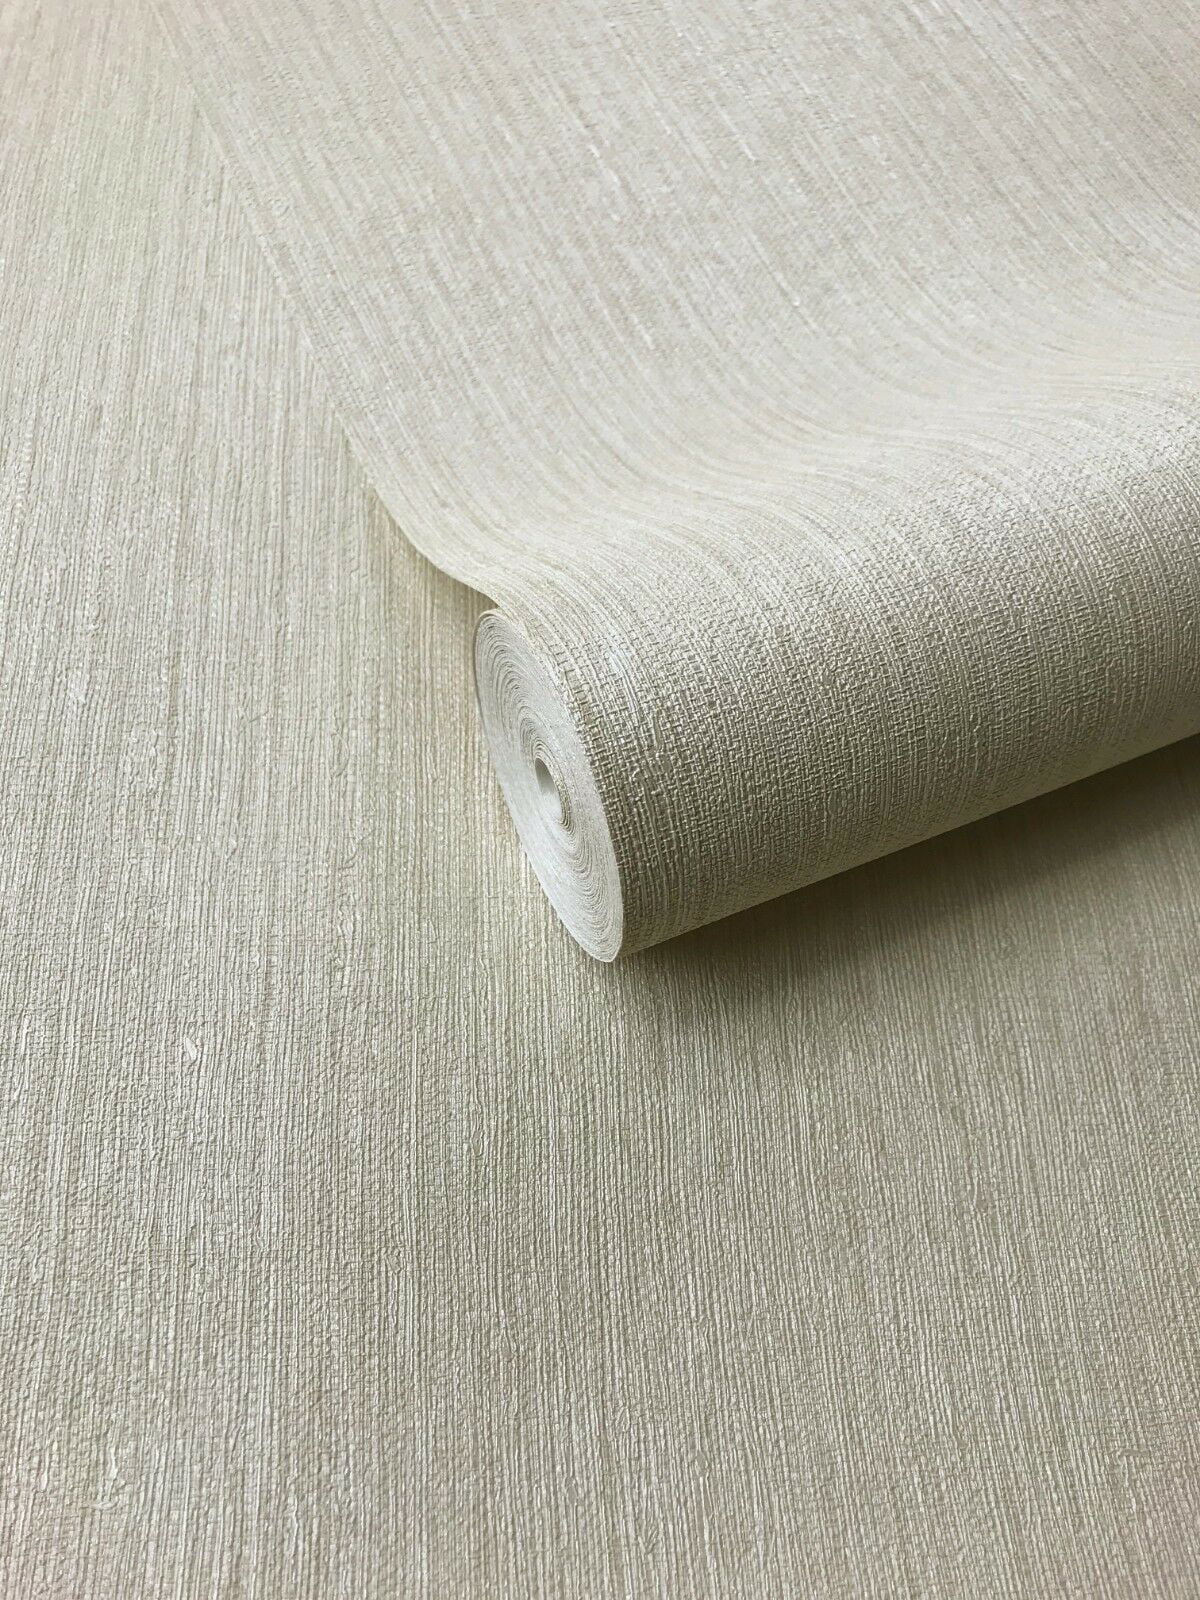 Off White Cream Faux sack Grasscloth wallpaper Textured non woven brown damask 